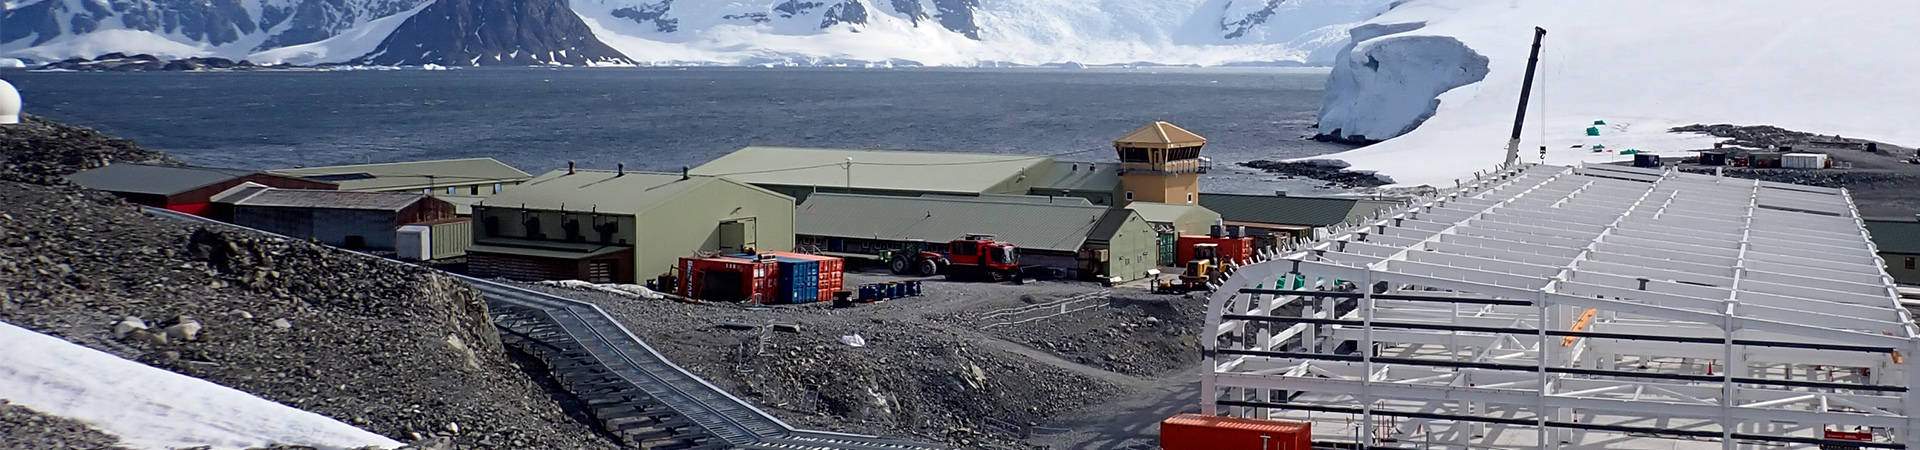 Steelwork near glacier and snow